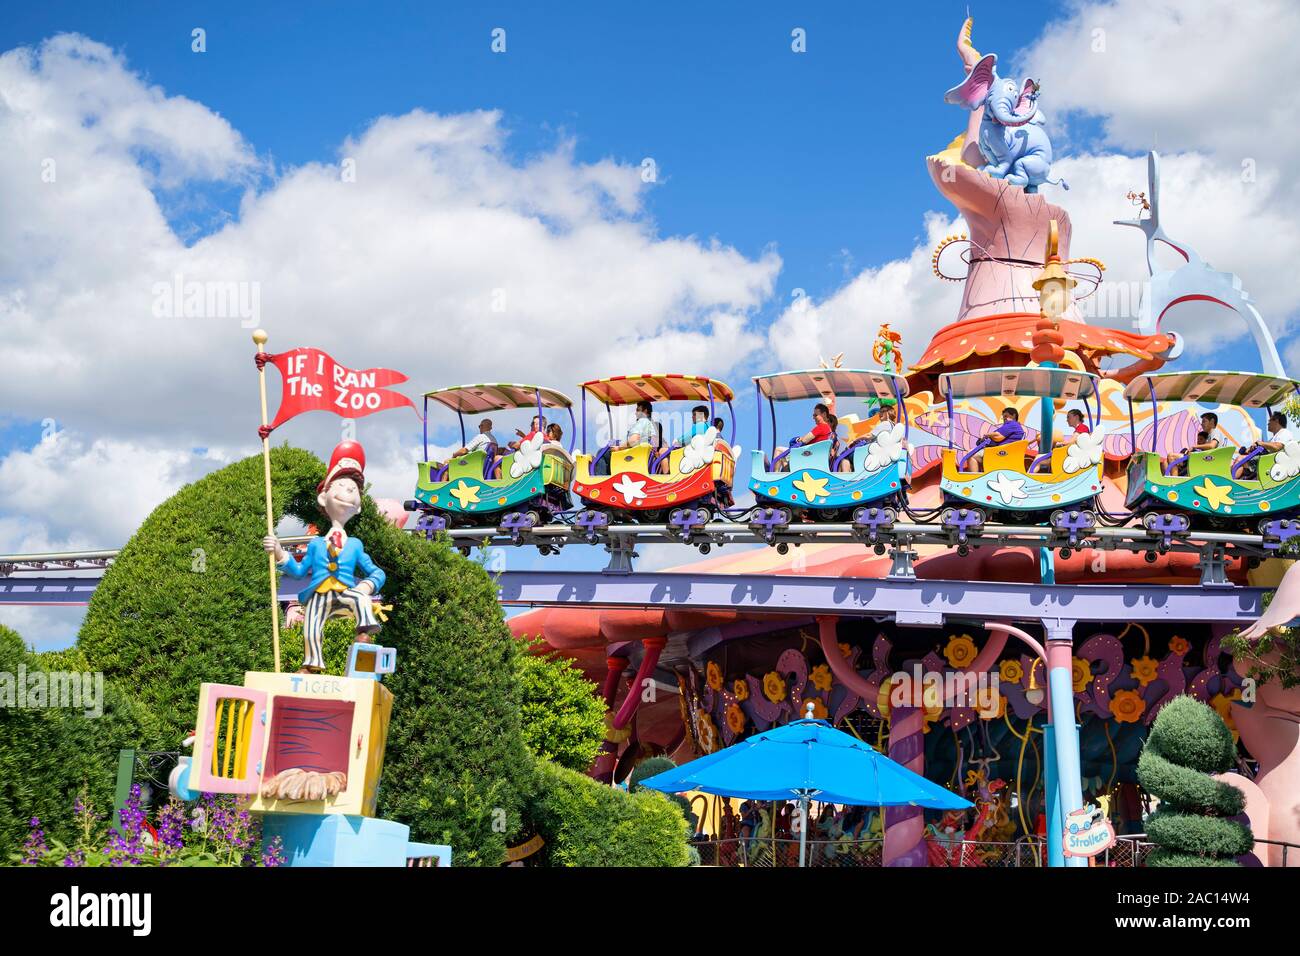 Seuss Landing Trolley Train Ride, People on Rides, Family, Adults with Children, Islands of Adventure, Universal Studios Resort, Orlando, Florida, USA Stock Photo